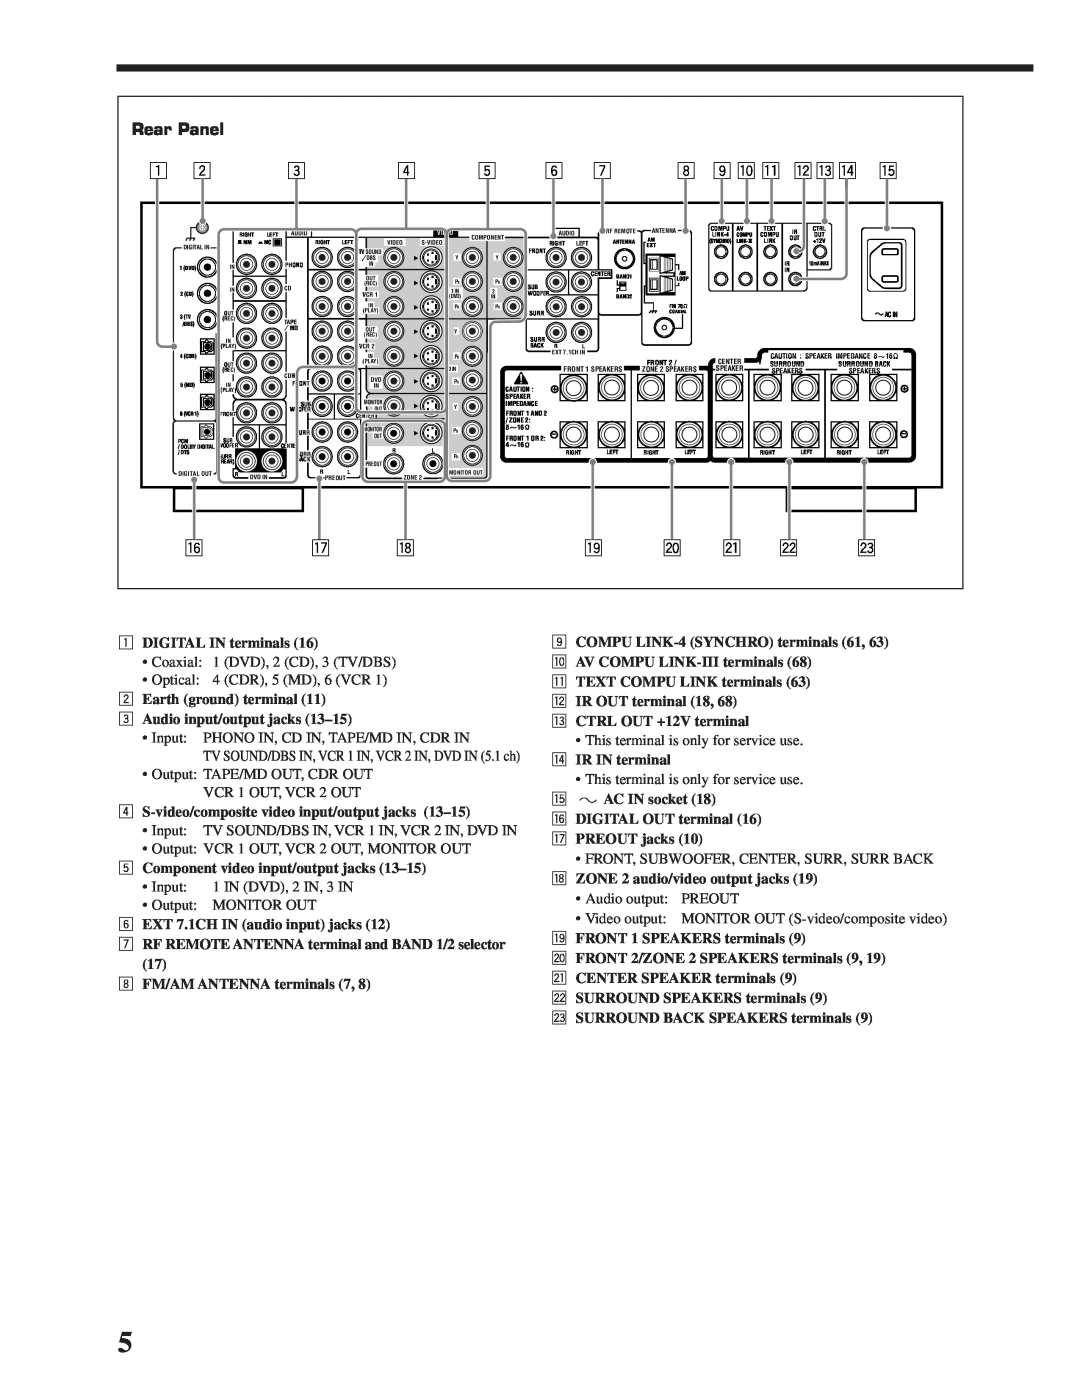 JVC RX-DP20VBK 8 9 p q w e r t, Rear Panel, 1DIGITAL IN terminals, Earth ground terminal, Audio input/output jacks 13–15 